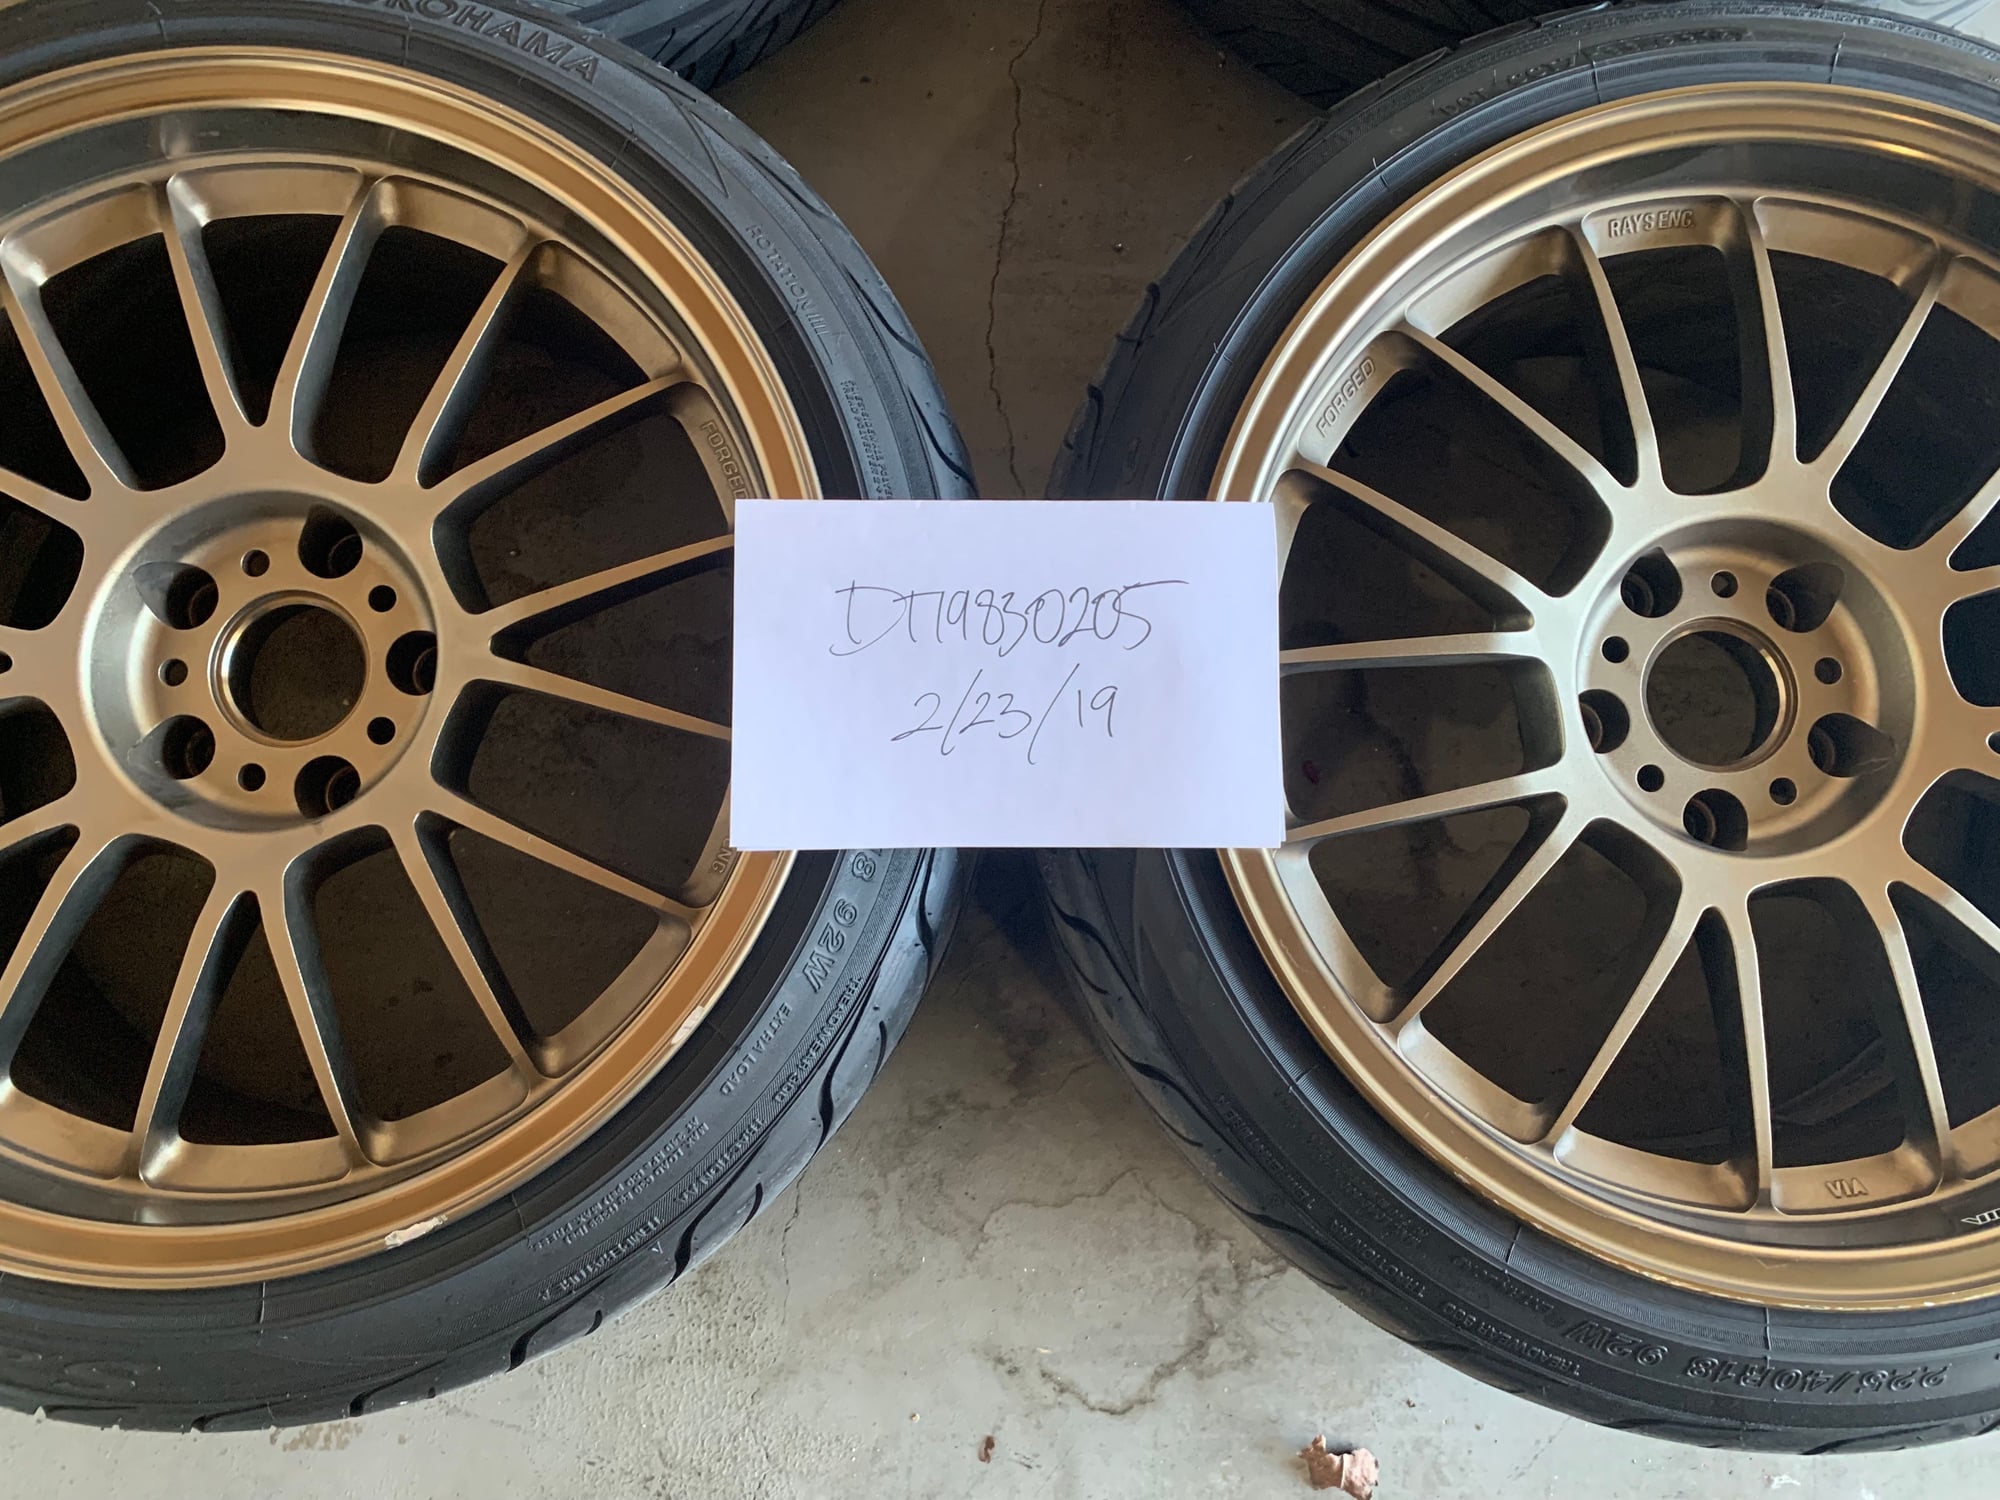 Wheels and Tires/Axles - Rare volk racing se37 bronze og bronze - Used - Perris, CA 92571, United States